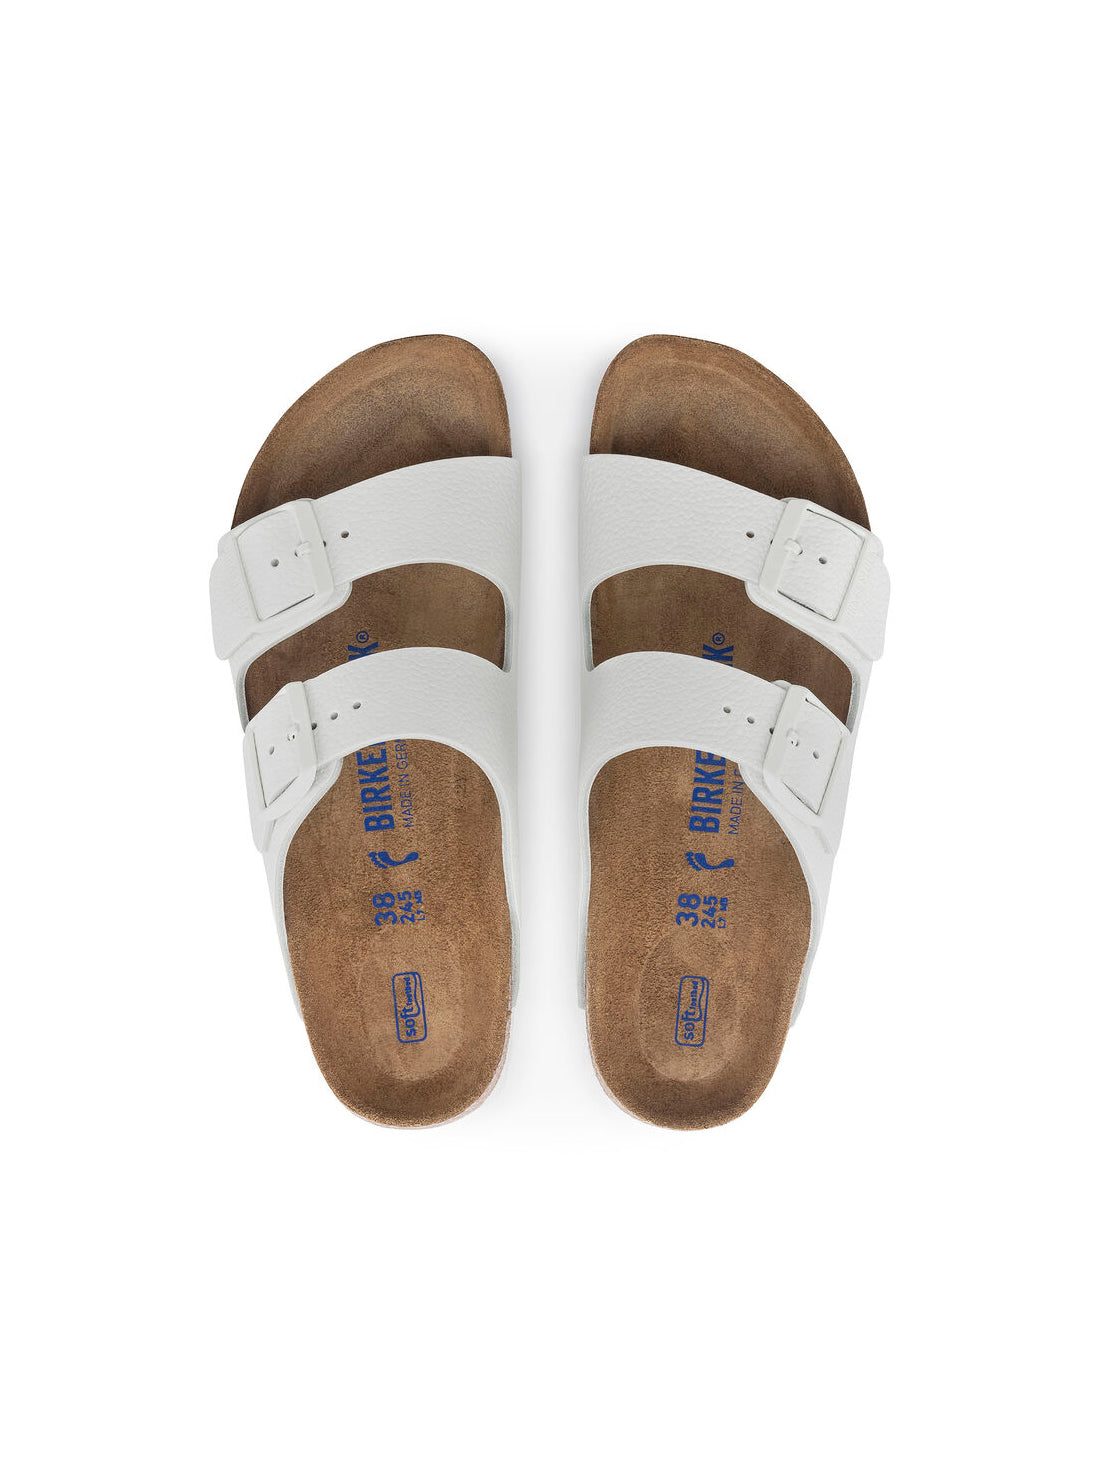 birkenstock arizona soft footbed sandal in white leather narrow